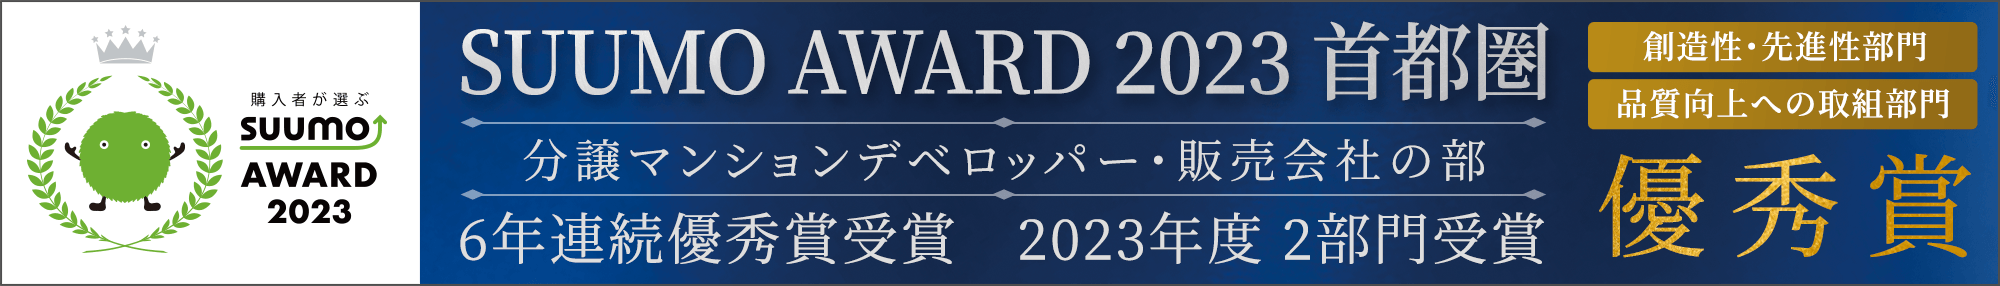 SUUMO AWARD 2023 首都圏